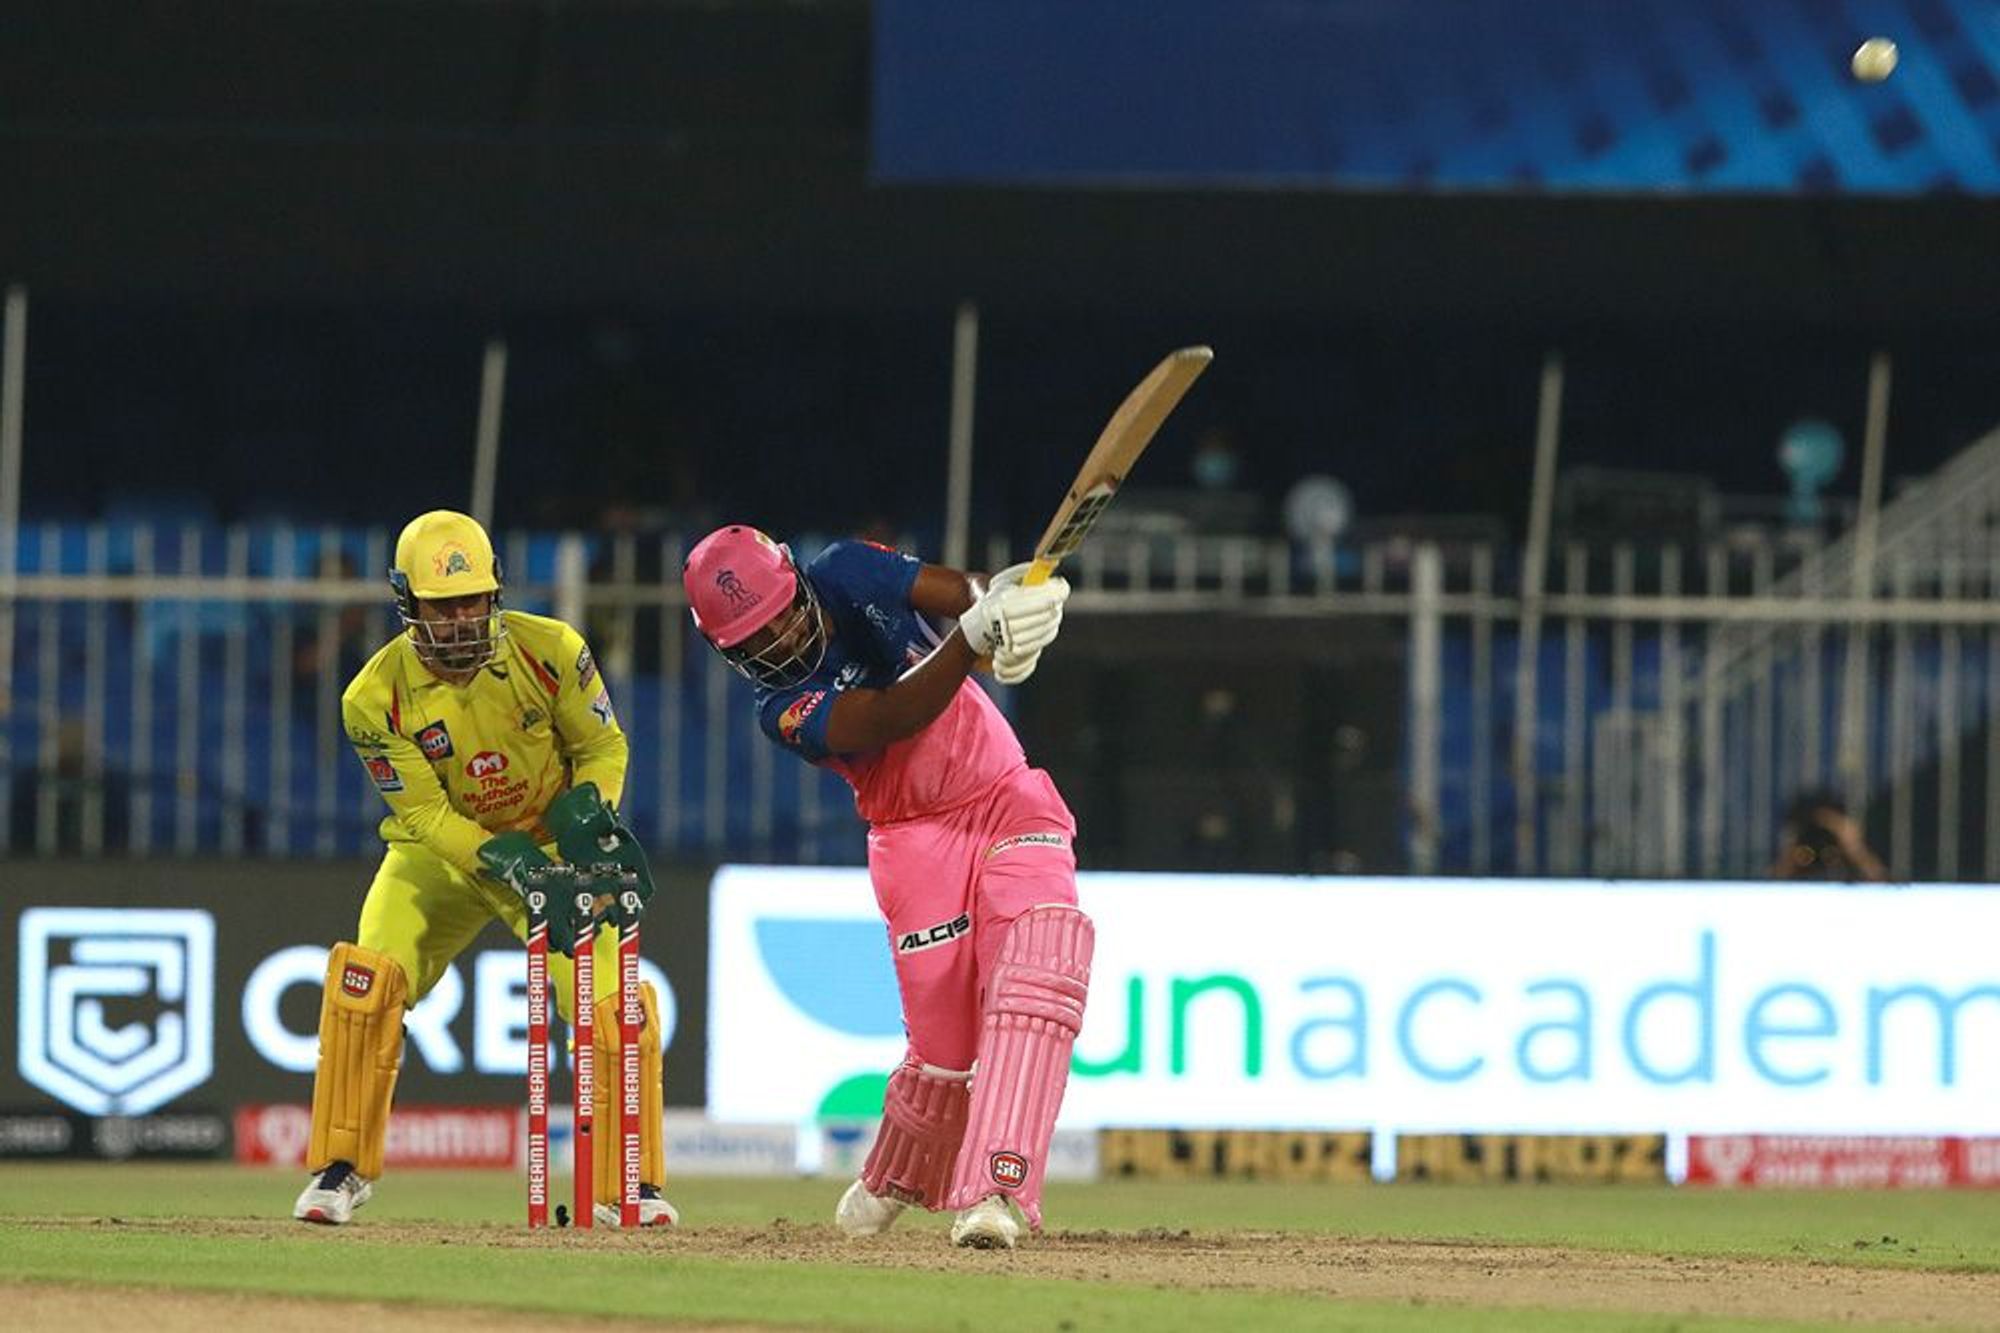 Three bets that will help you win big in the Rajasthan vs Kolkata encounter